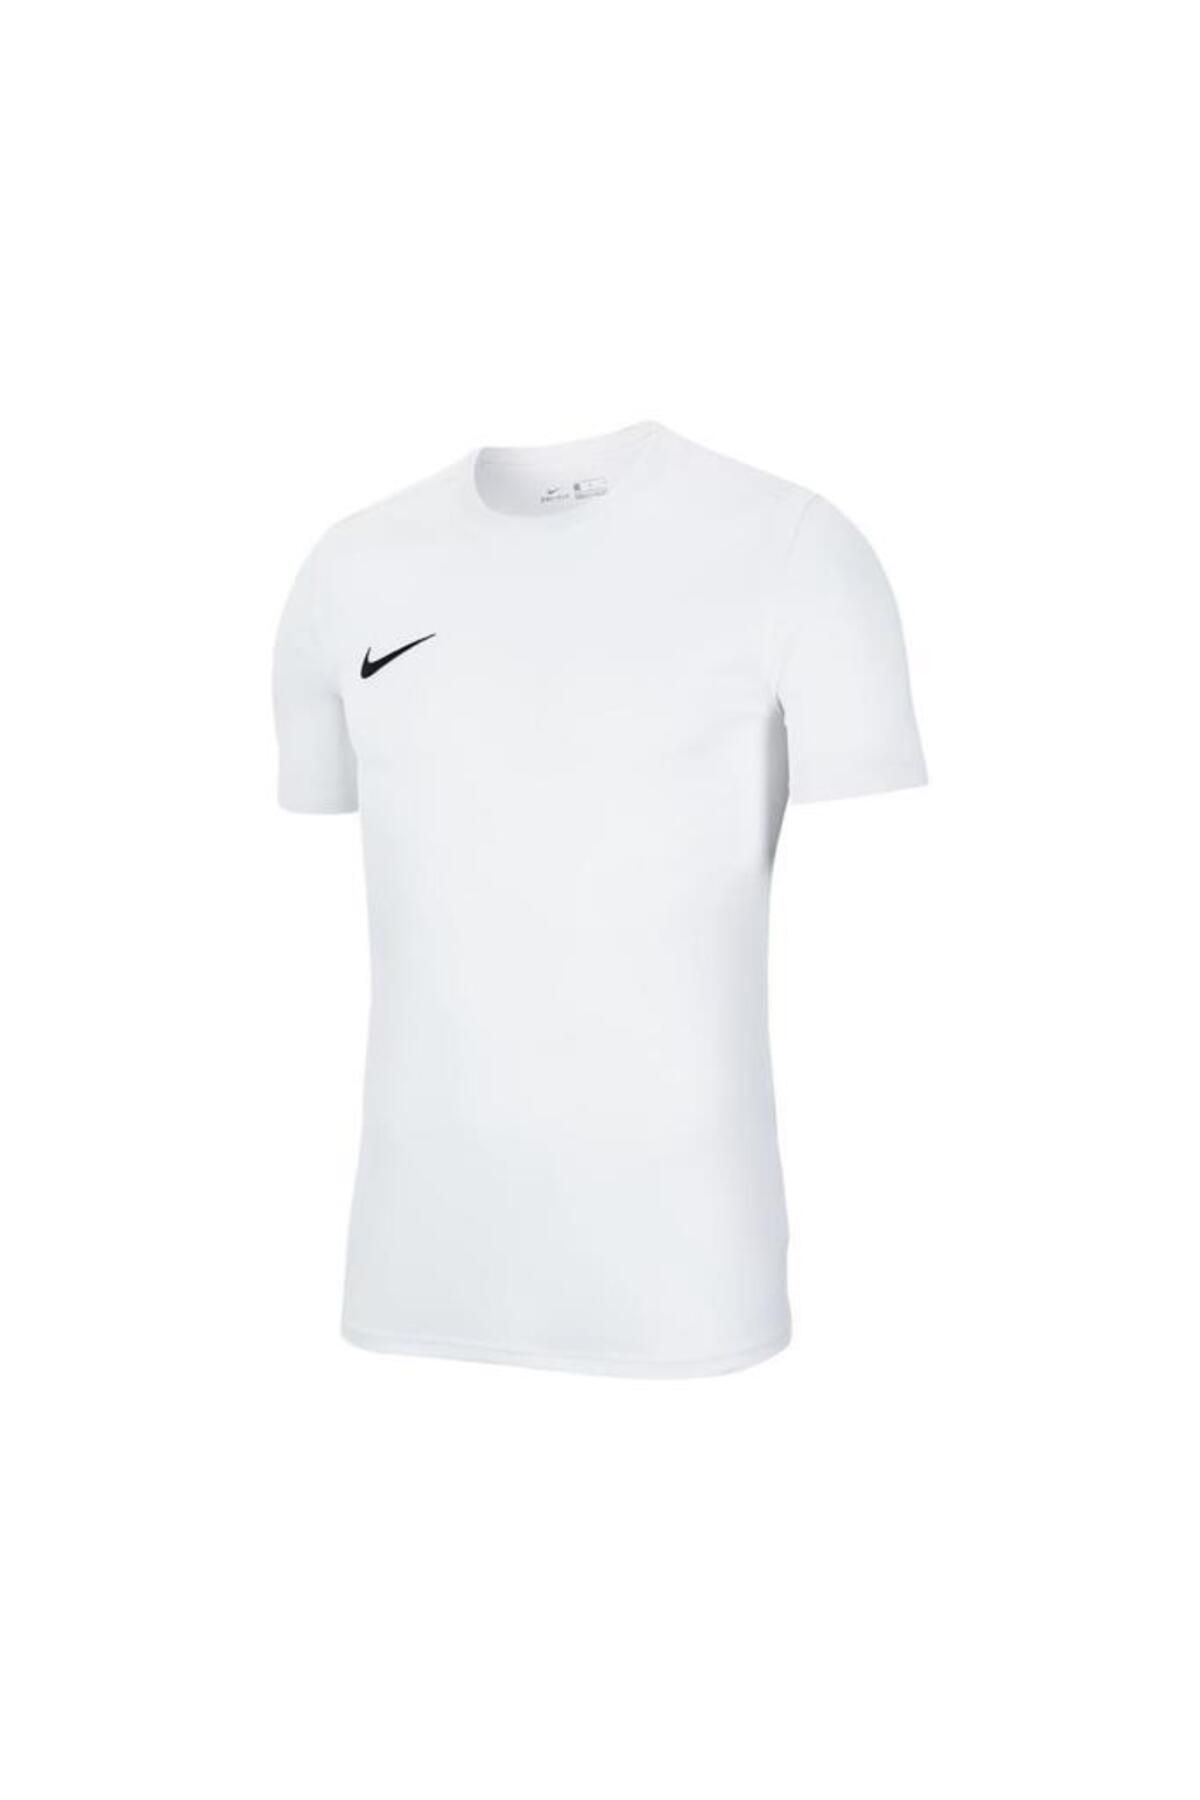 Nike Dry Park Vıı Bv6708-100 Erkek Tişört